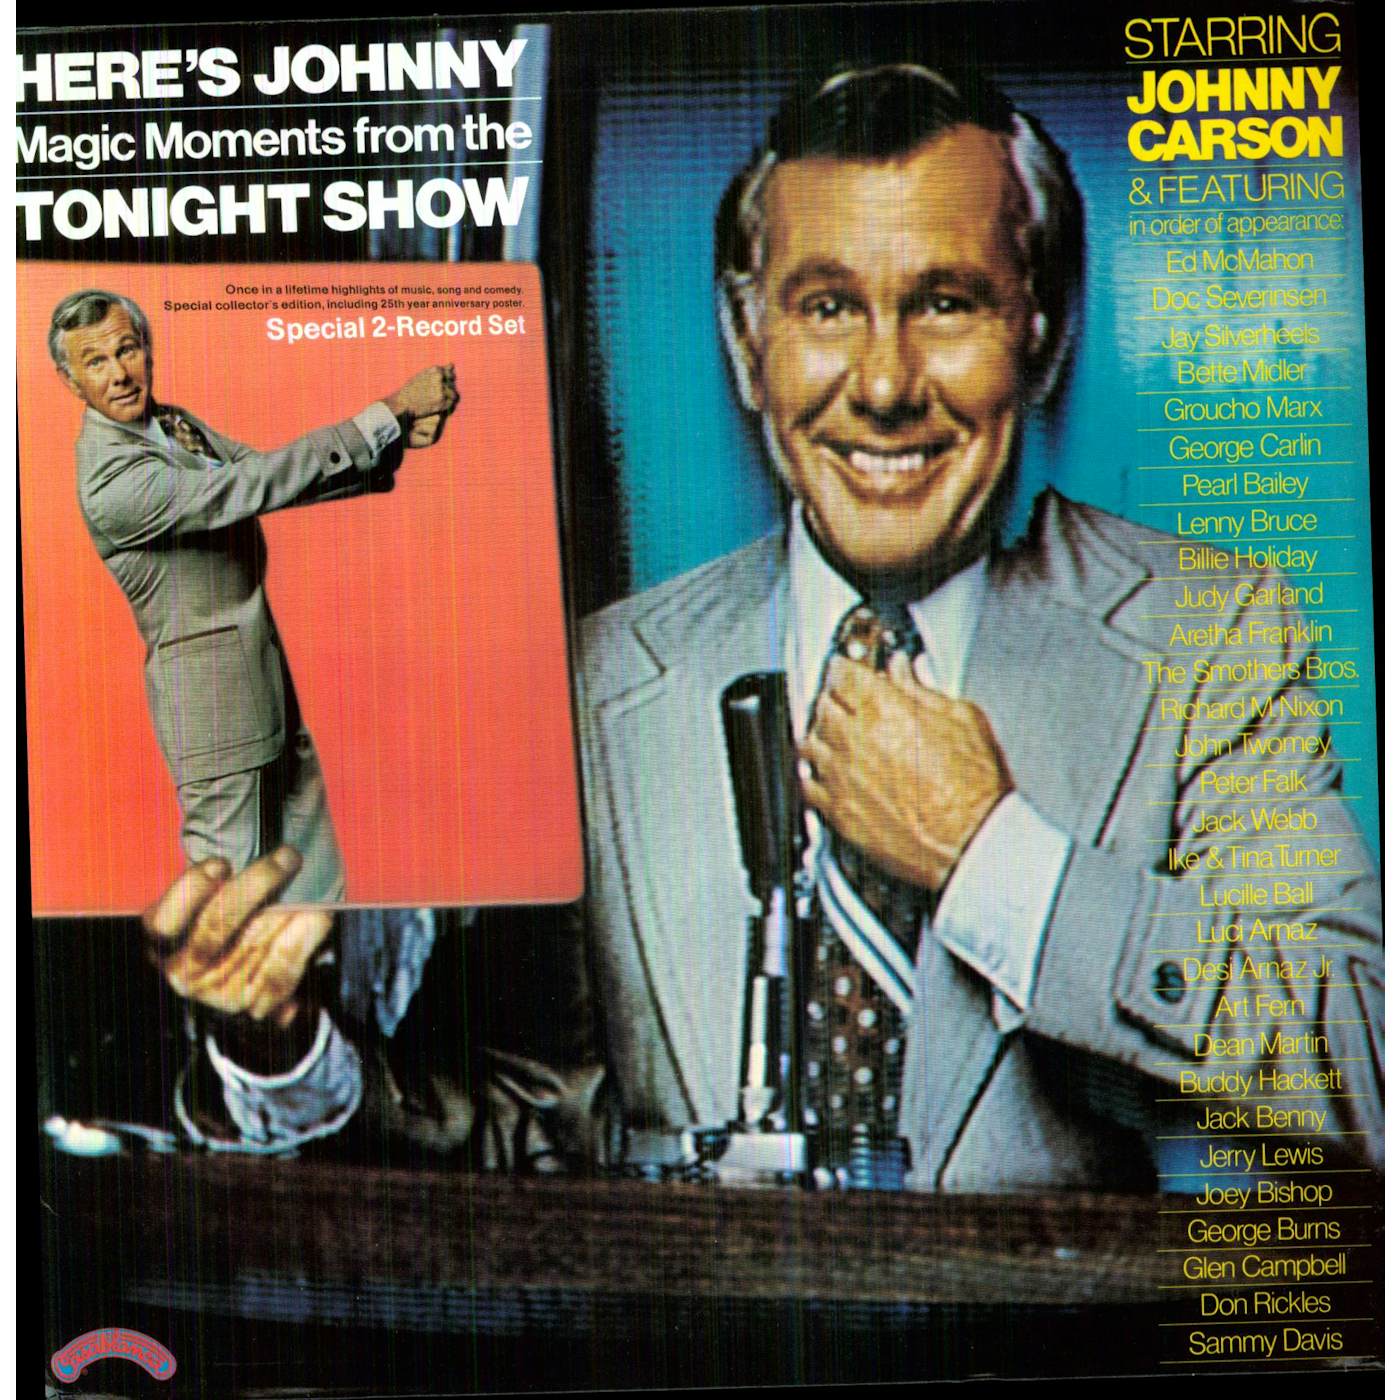 Here'S Johnny-Magic Moments Tonight Show / O.S.T. HERE'S JOHNNY-MAGIC MOMENTS TONIGHT SHOW / Original Soundtrack Vinyl Record